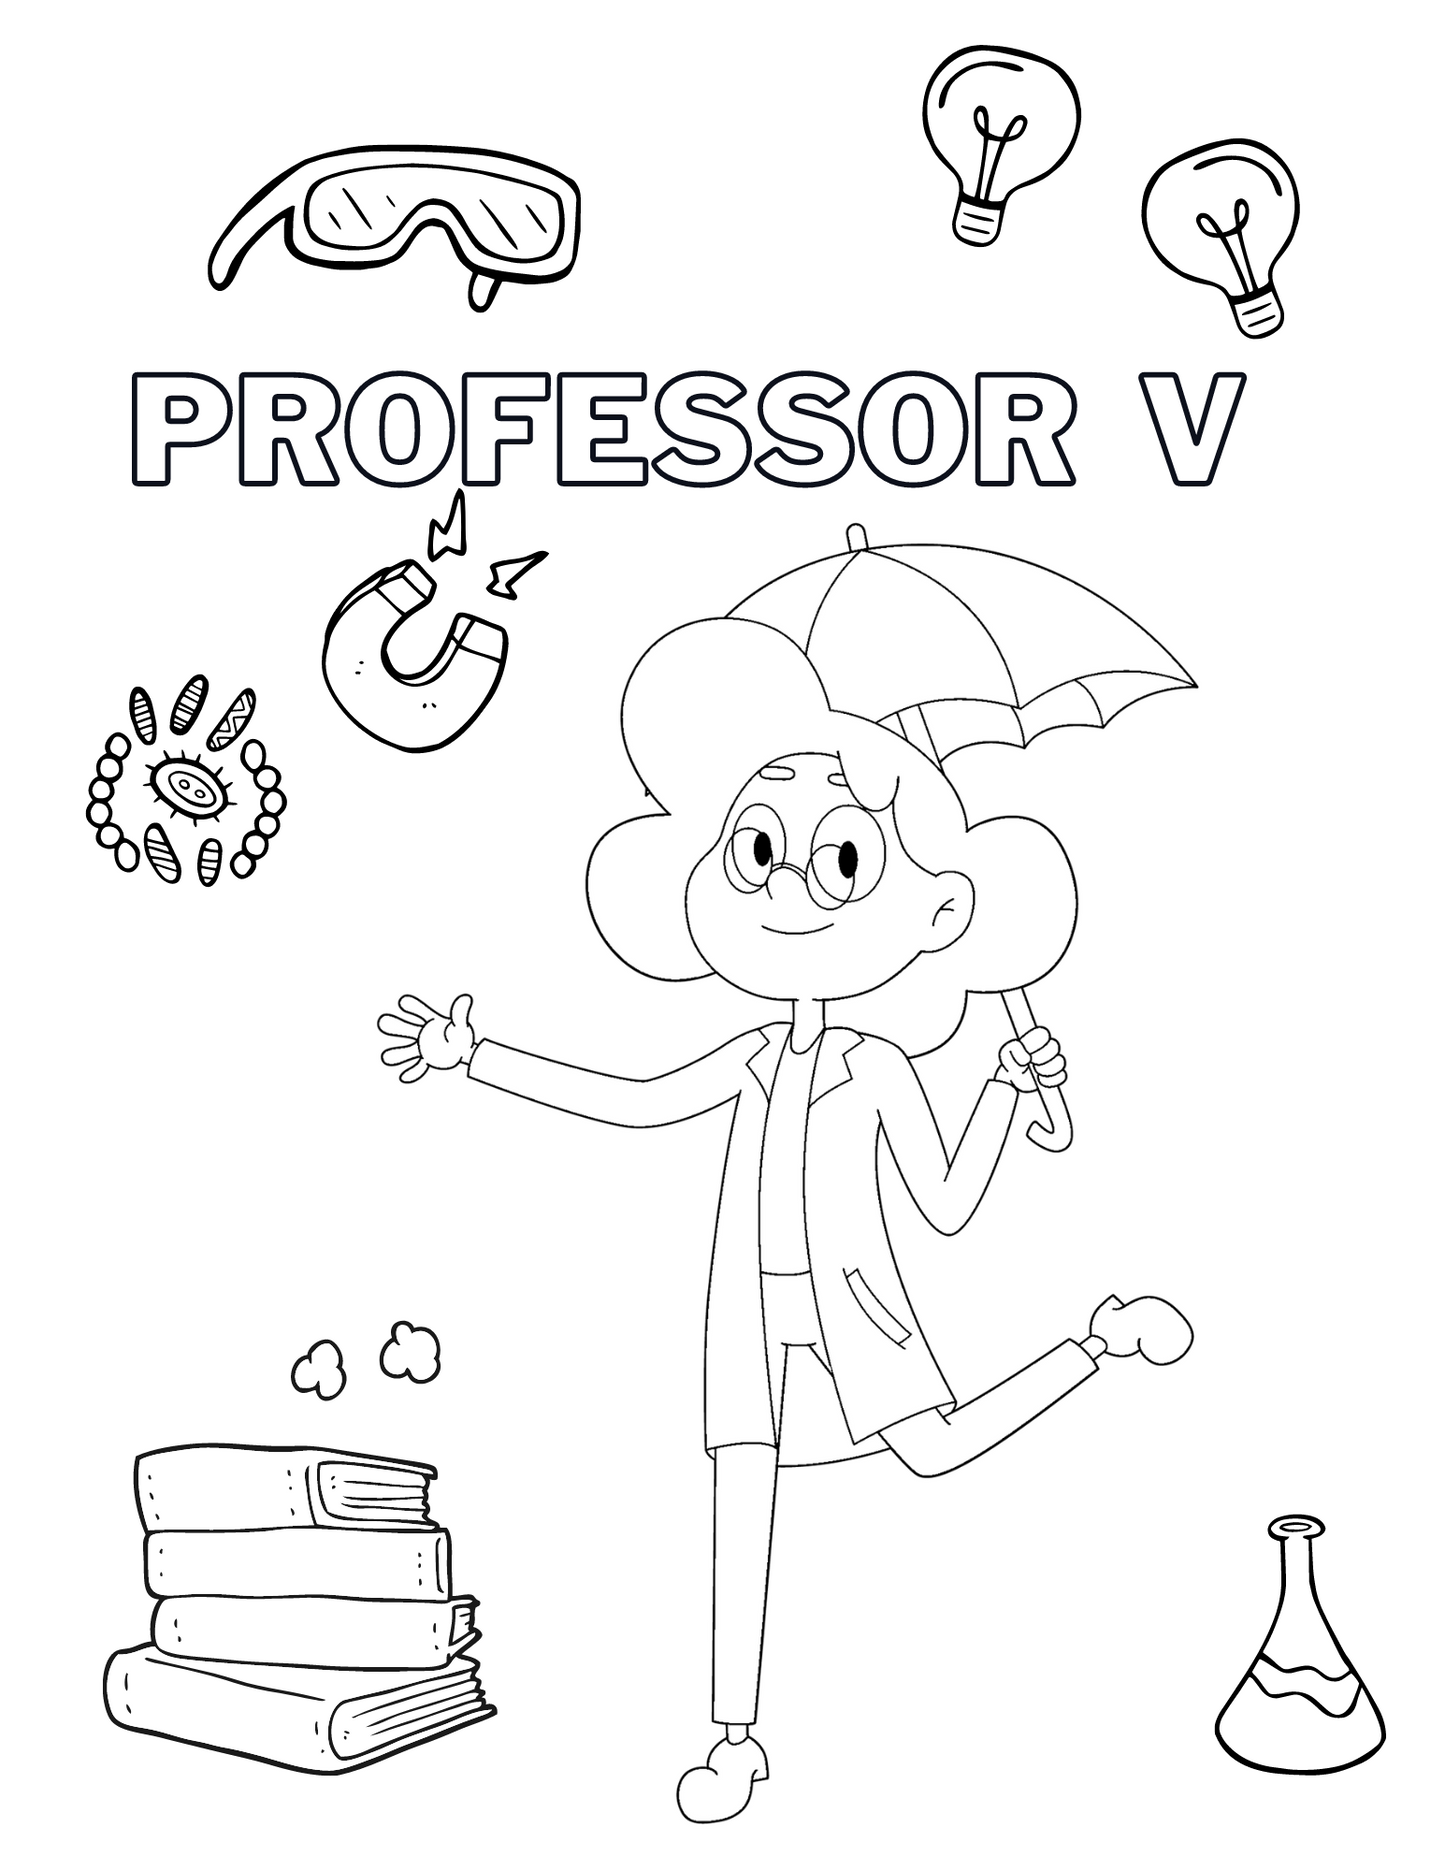 Free Download - Professor V Coloring Sheet (1 Quantity = Unlimited Downloads)